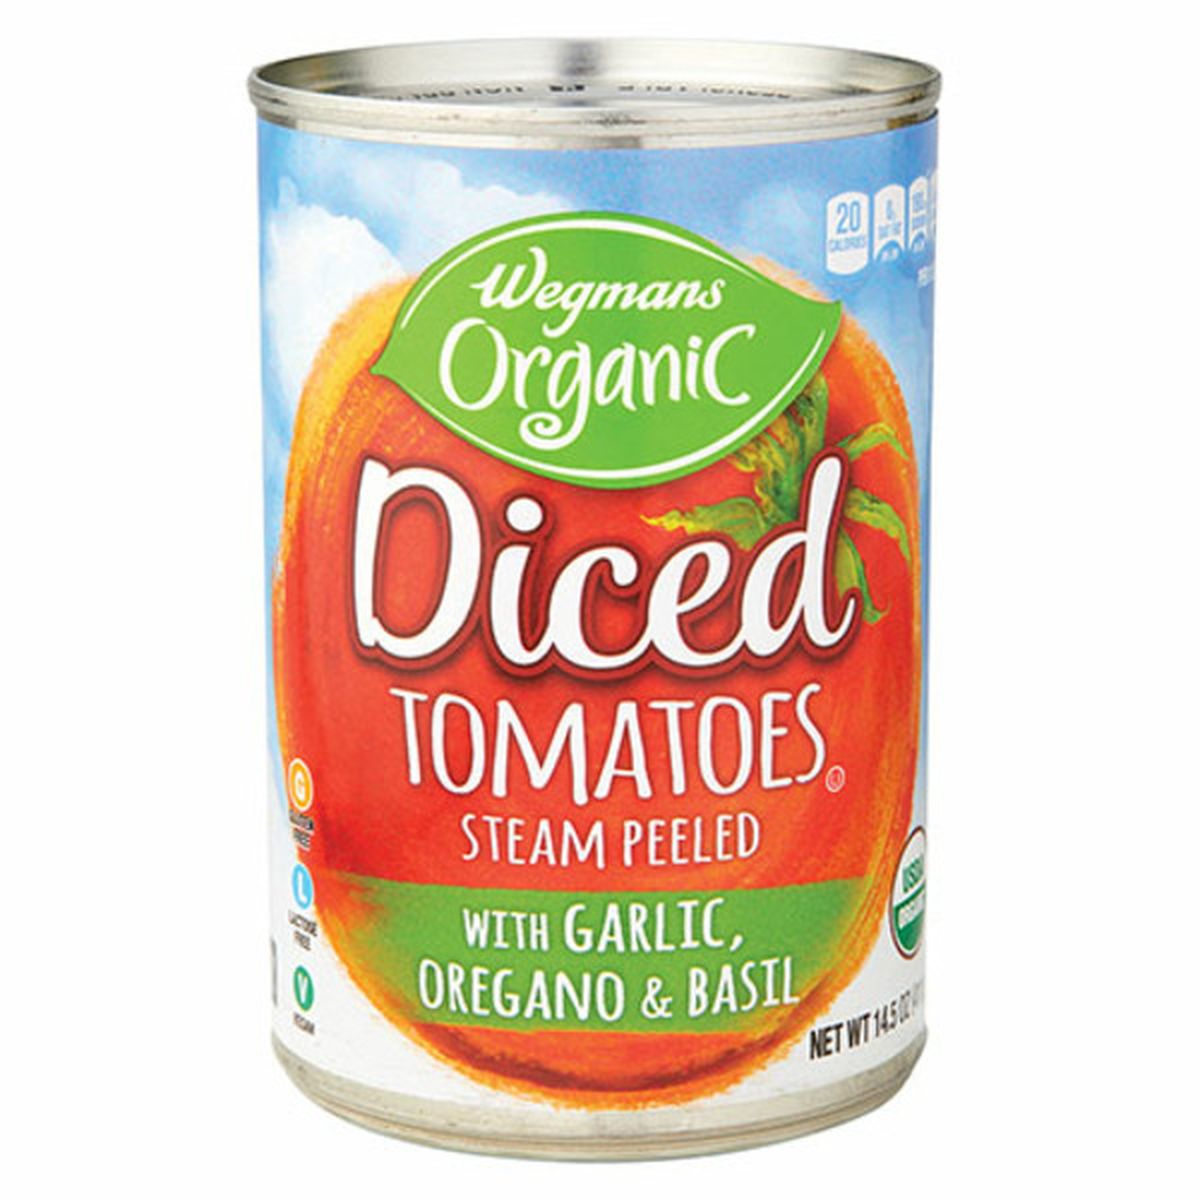 Calories in Wegmans Organic Diced Tomatoes with Garlic, Oregano, & Basil